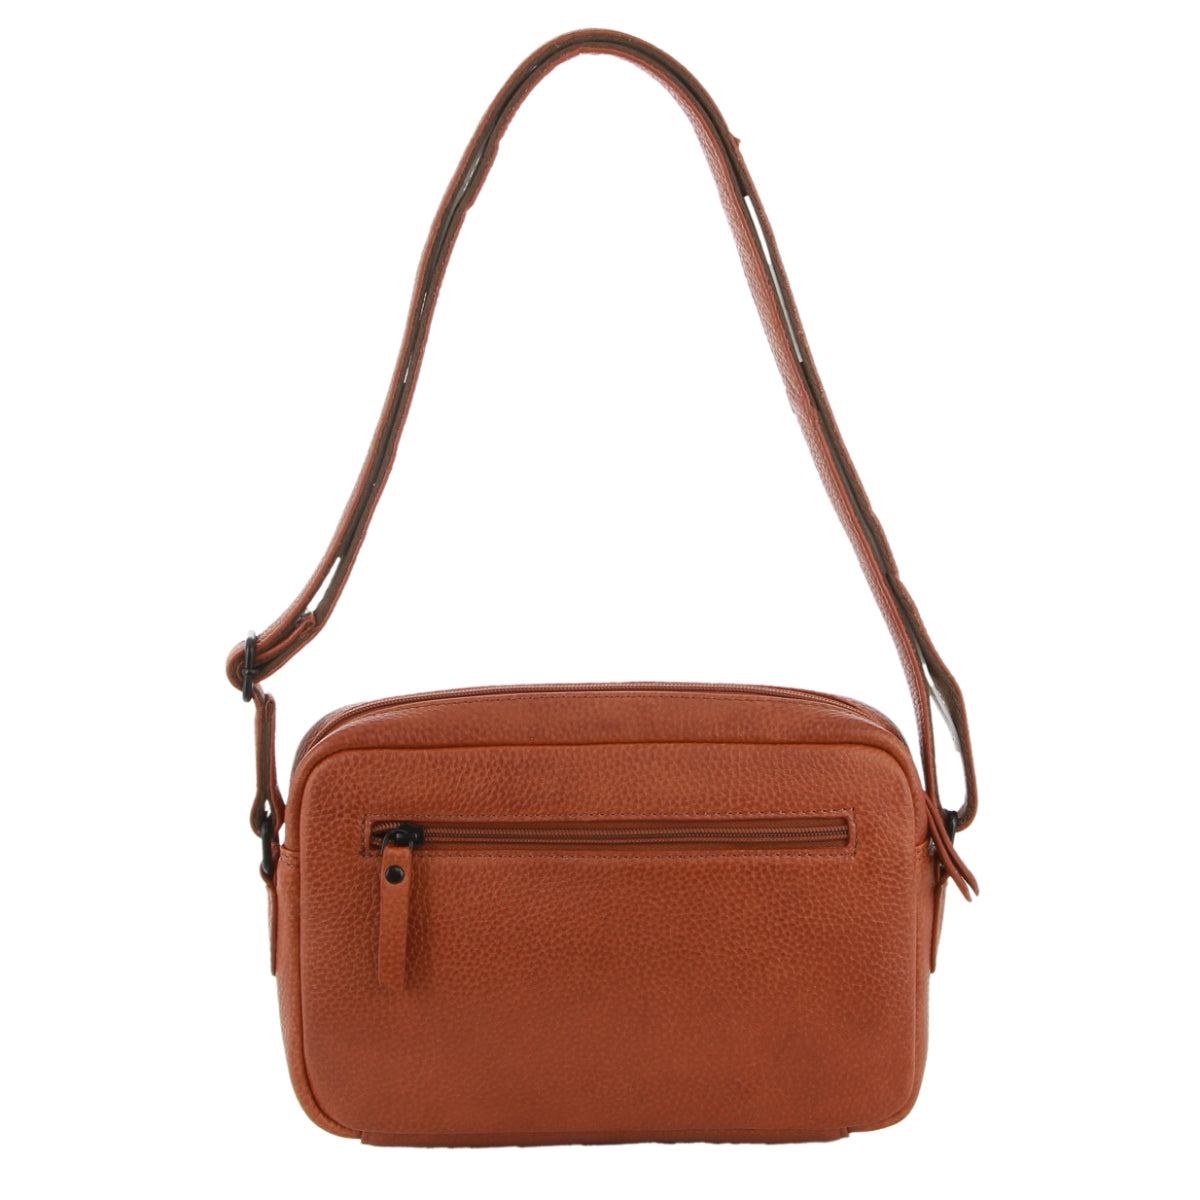 Milleni - NL3871 Small leather sidebag - Cognac-1